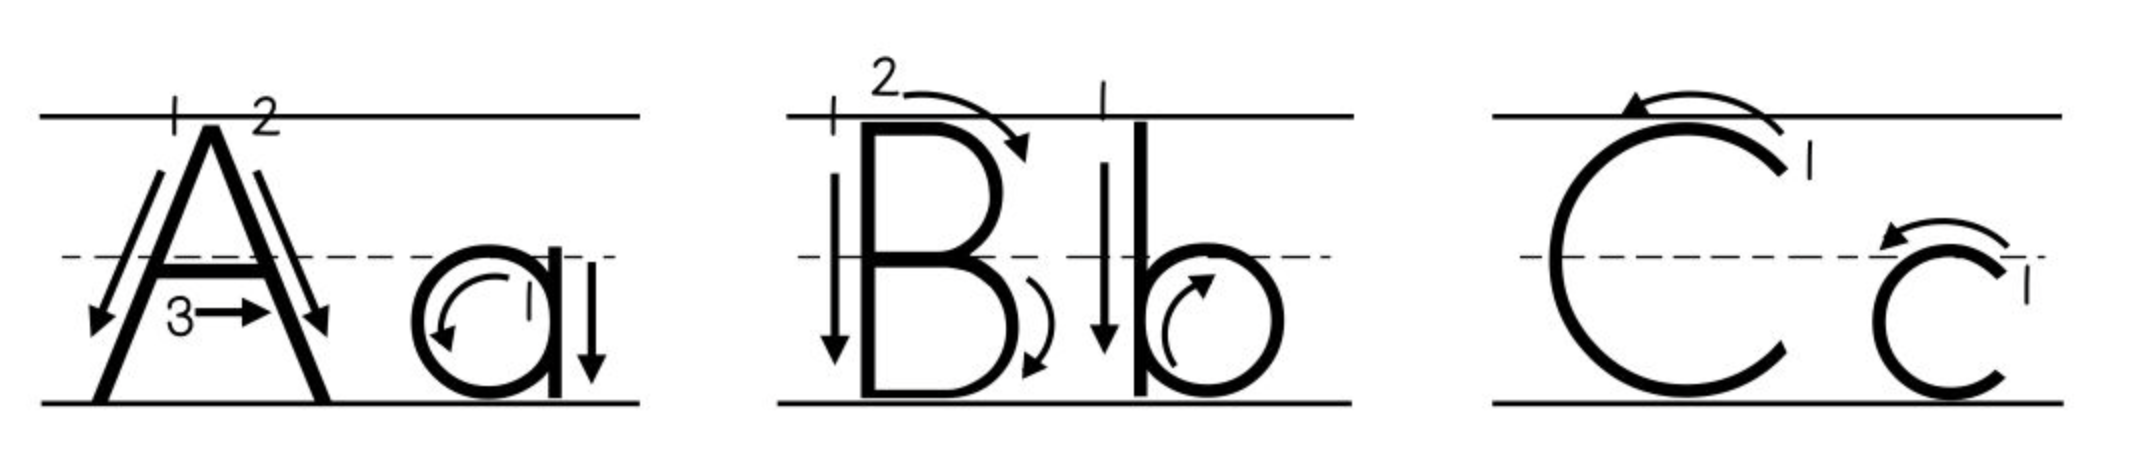 a Zaner-Bloser letter formation chart